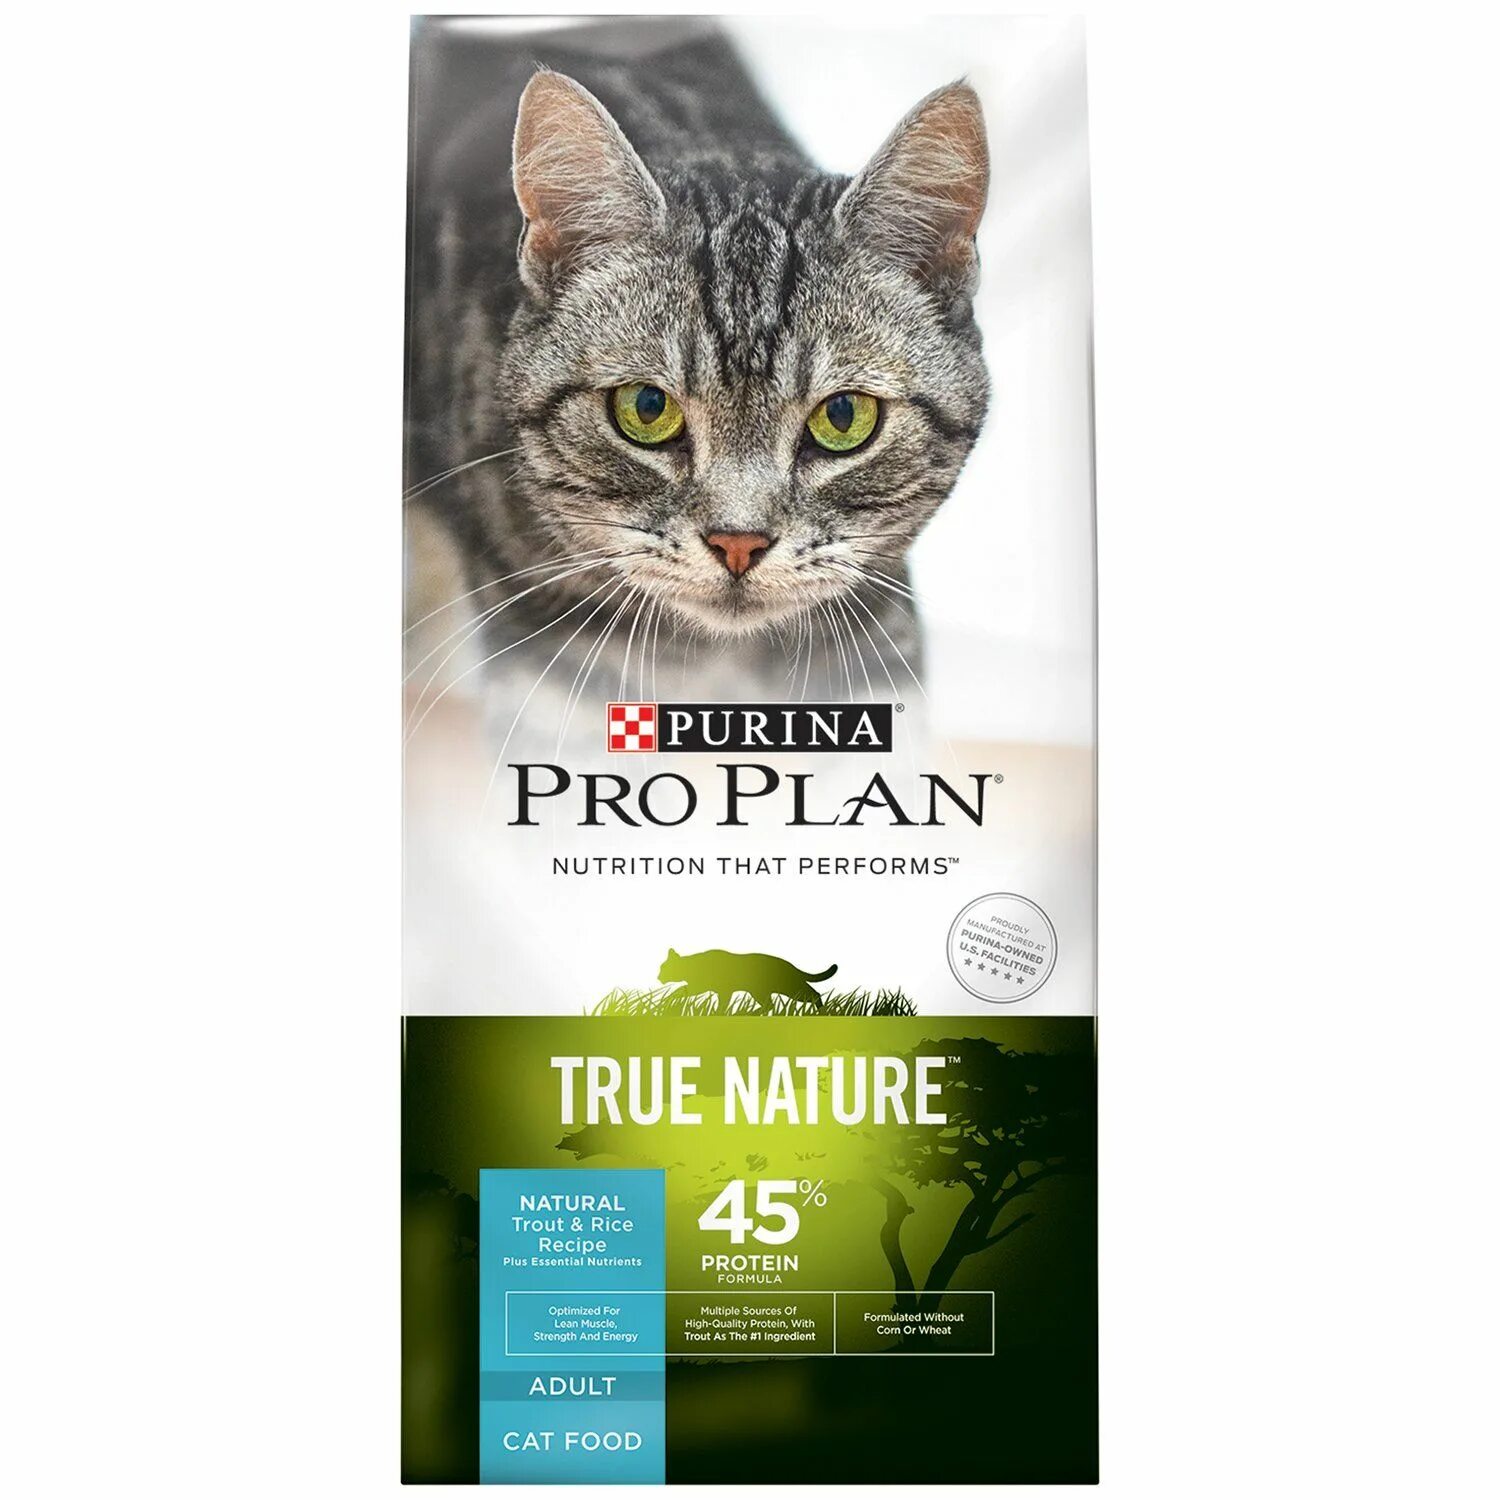 Pro Plan nature elements для кошек. Проплан натур элемент. Проплан реклама. Про план натюр элемени. Pro plan elements для кошек